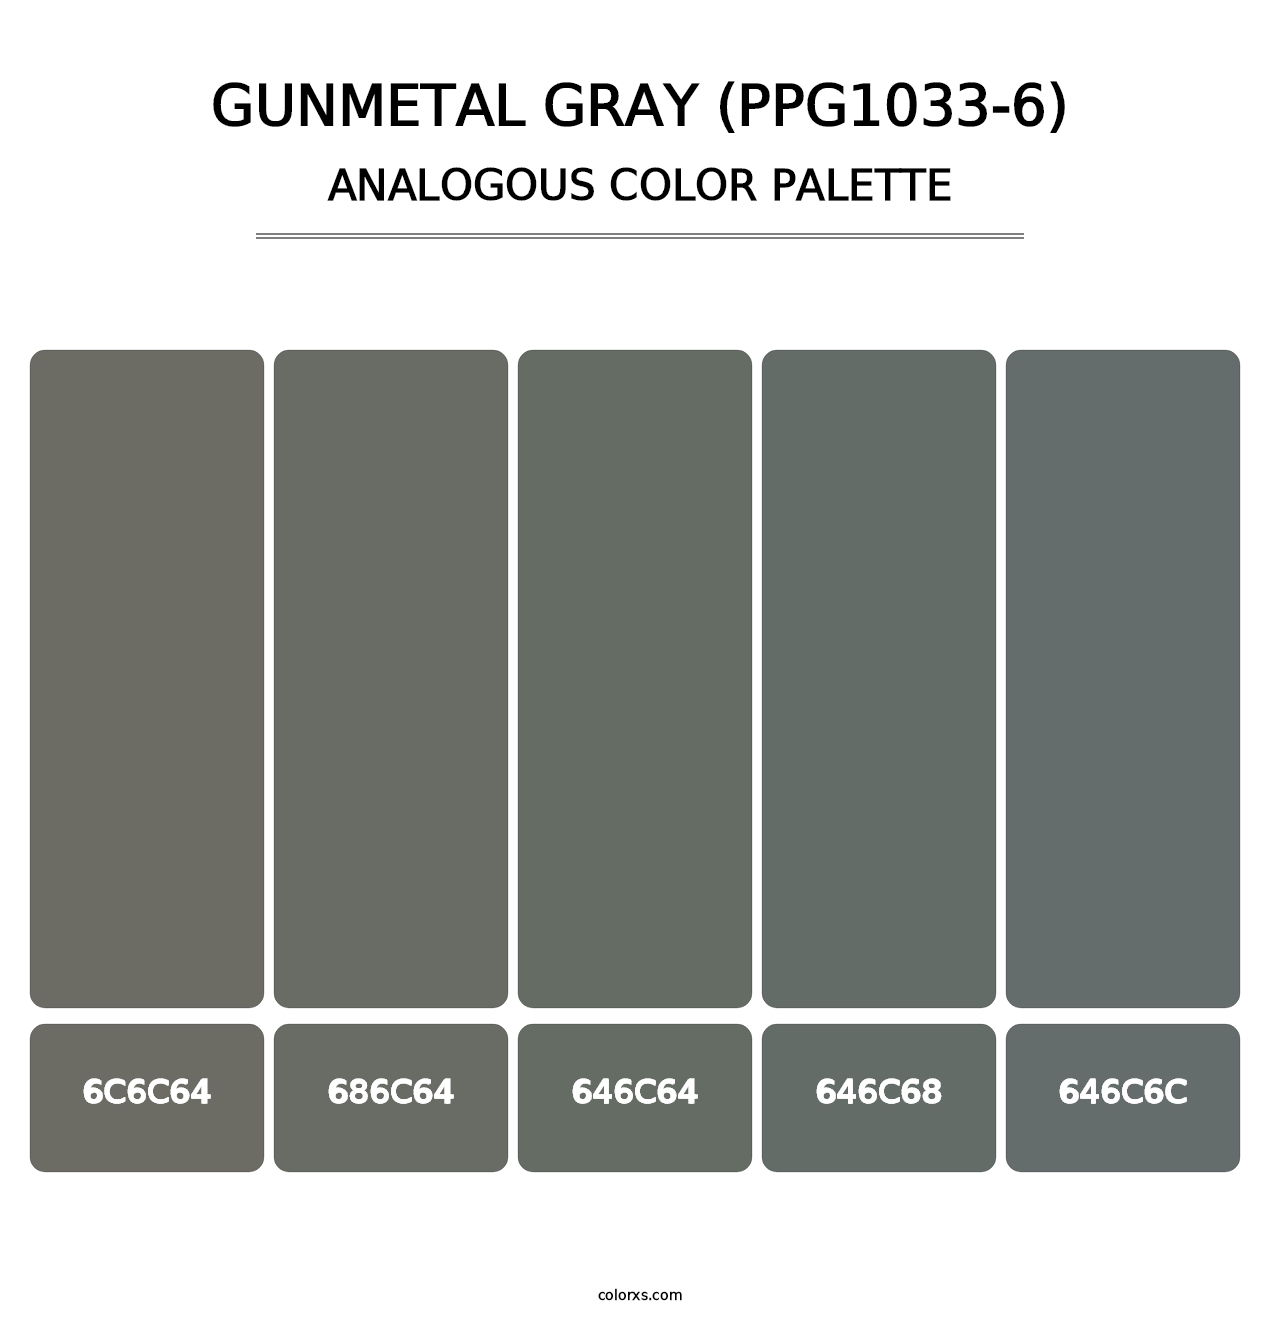 Gunmetal Gray (PPG1033-6) - Analogous Color Palette